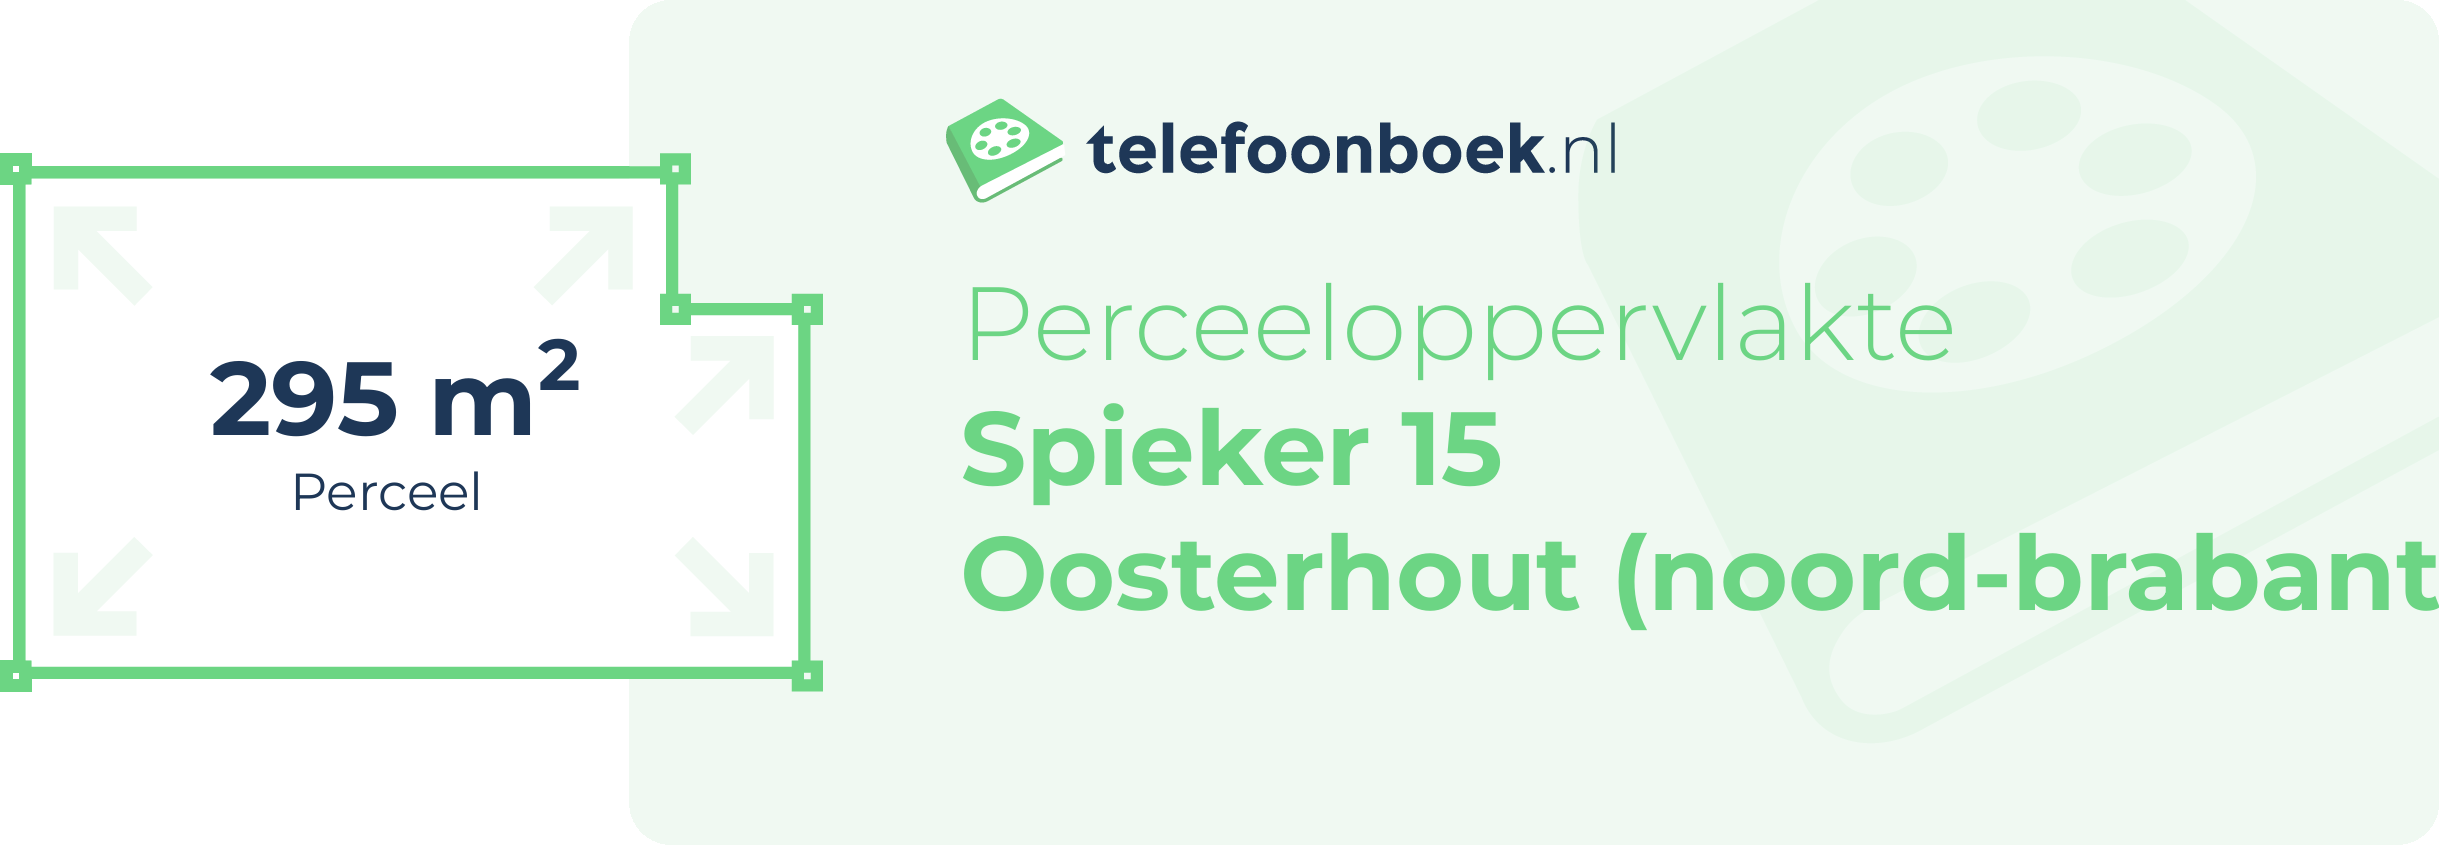 Perceeloppervlakte Spieker 15 Oosterhout (Noord-Brabant)